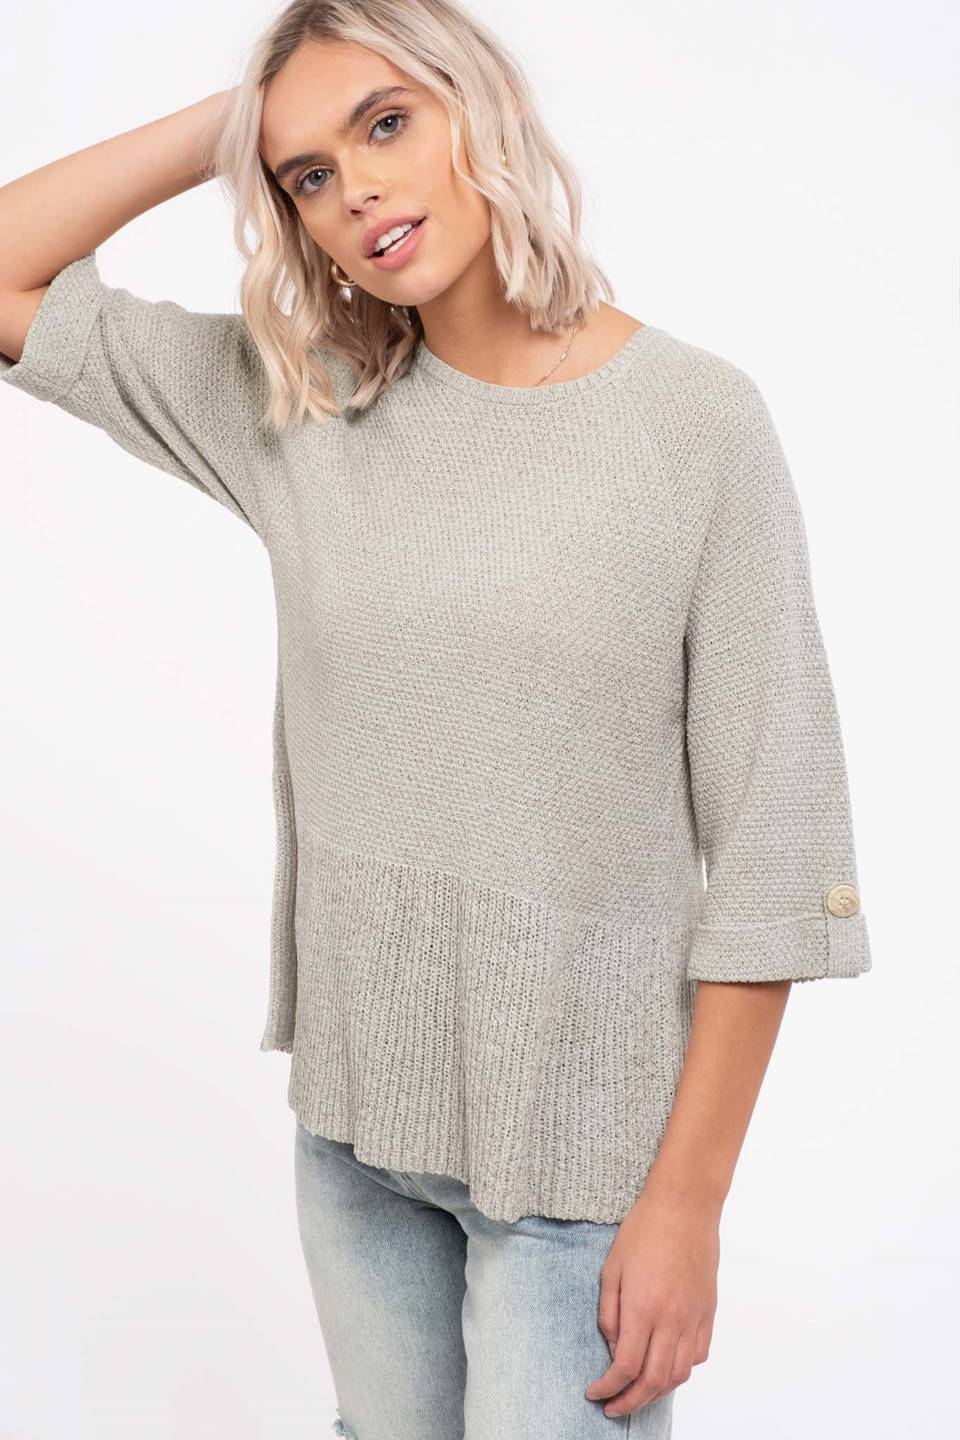 Flounce Bottom Sweater